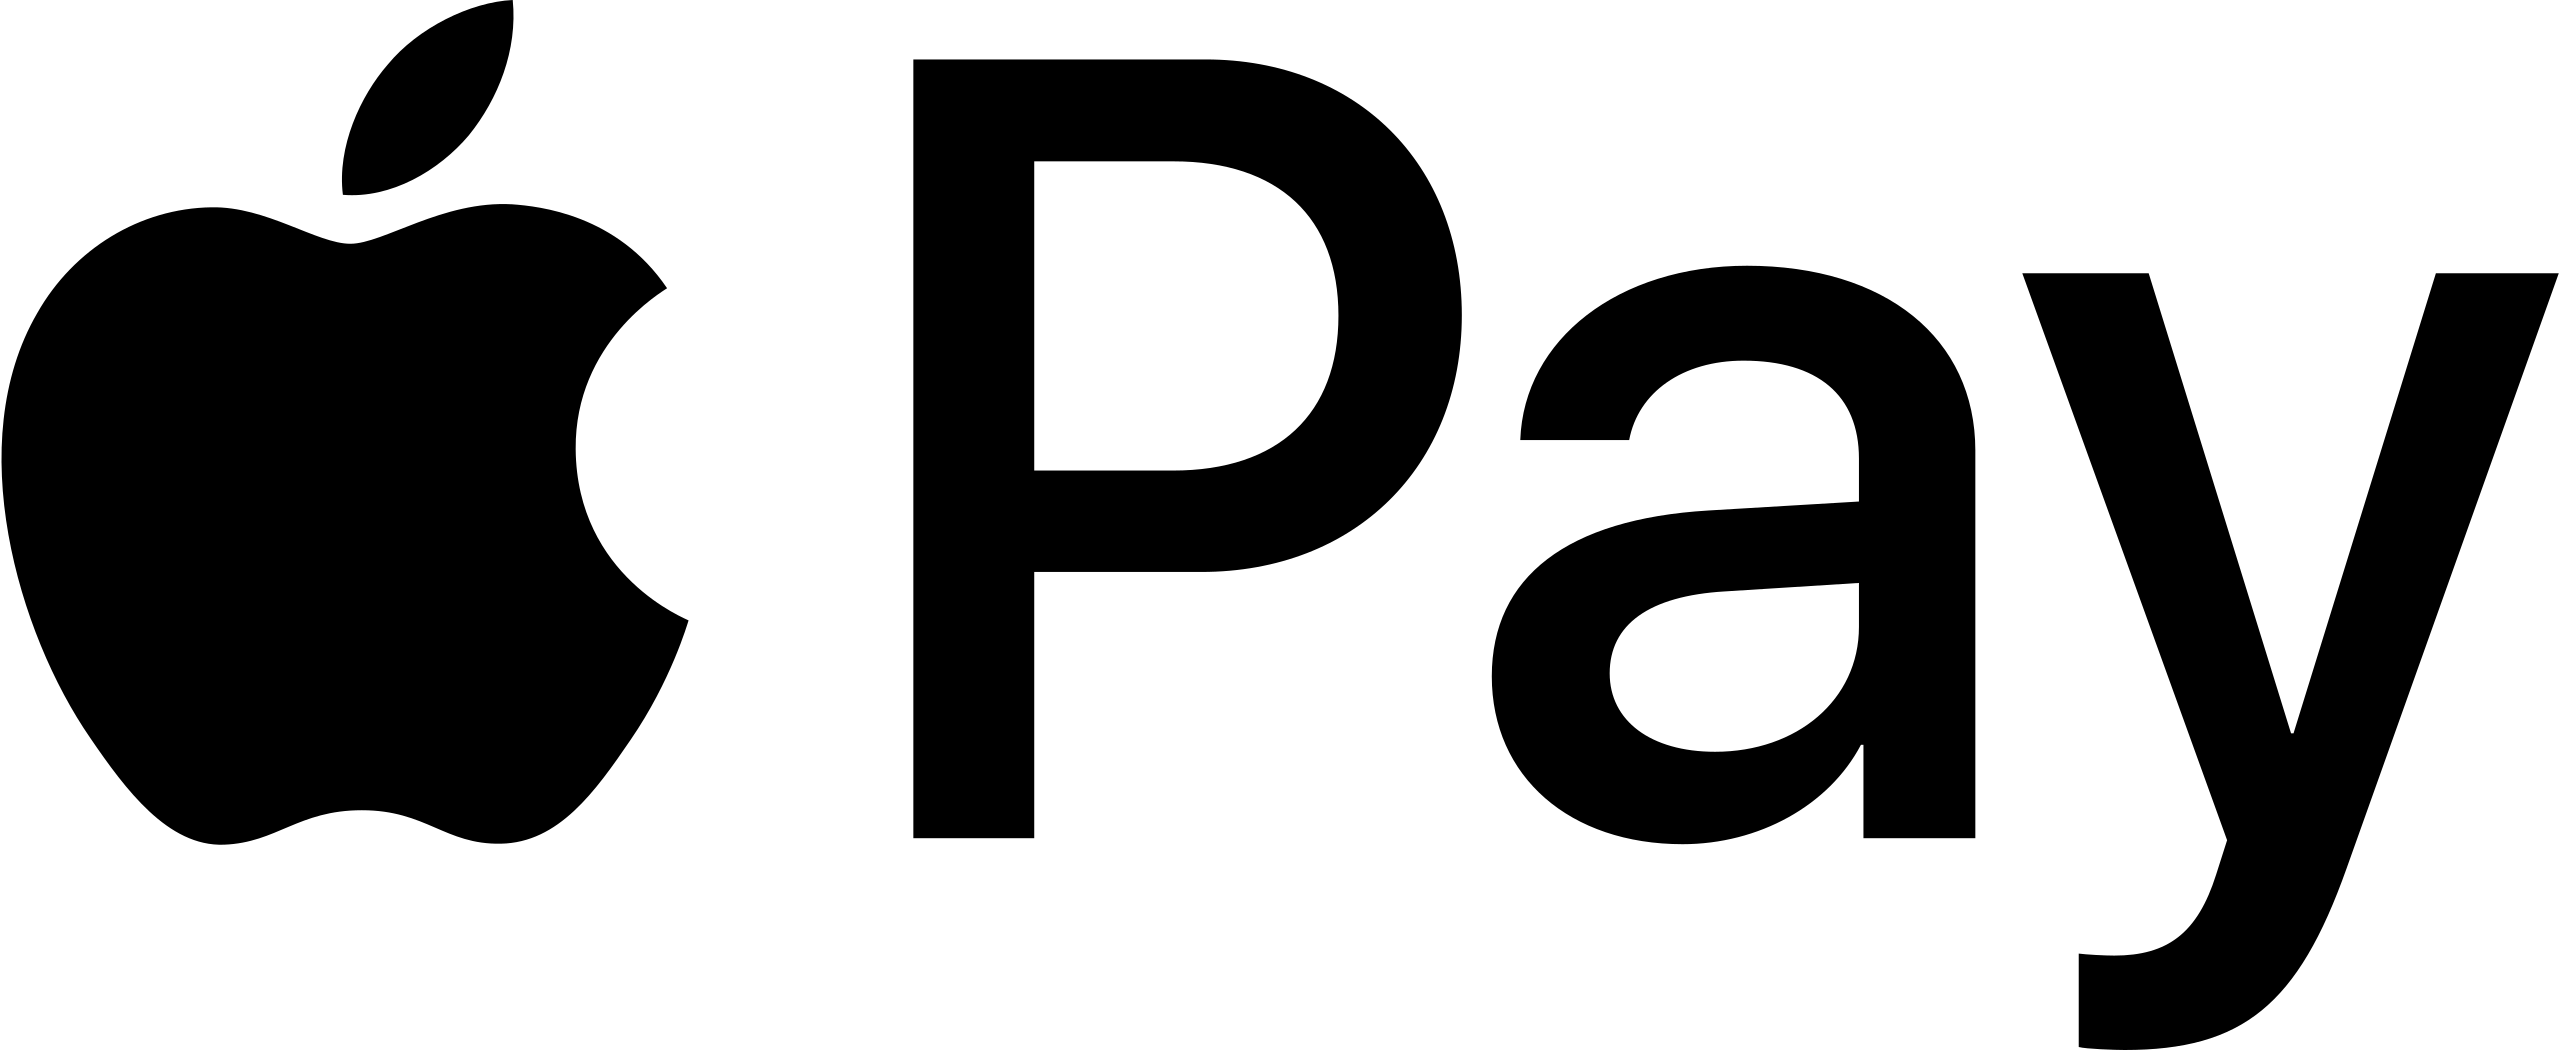 File:Apple Pay logo.svg - Wikipedia